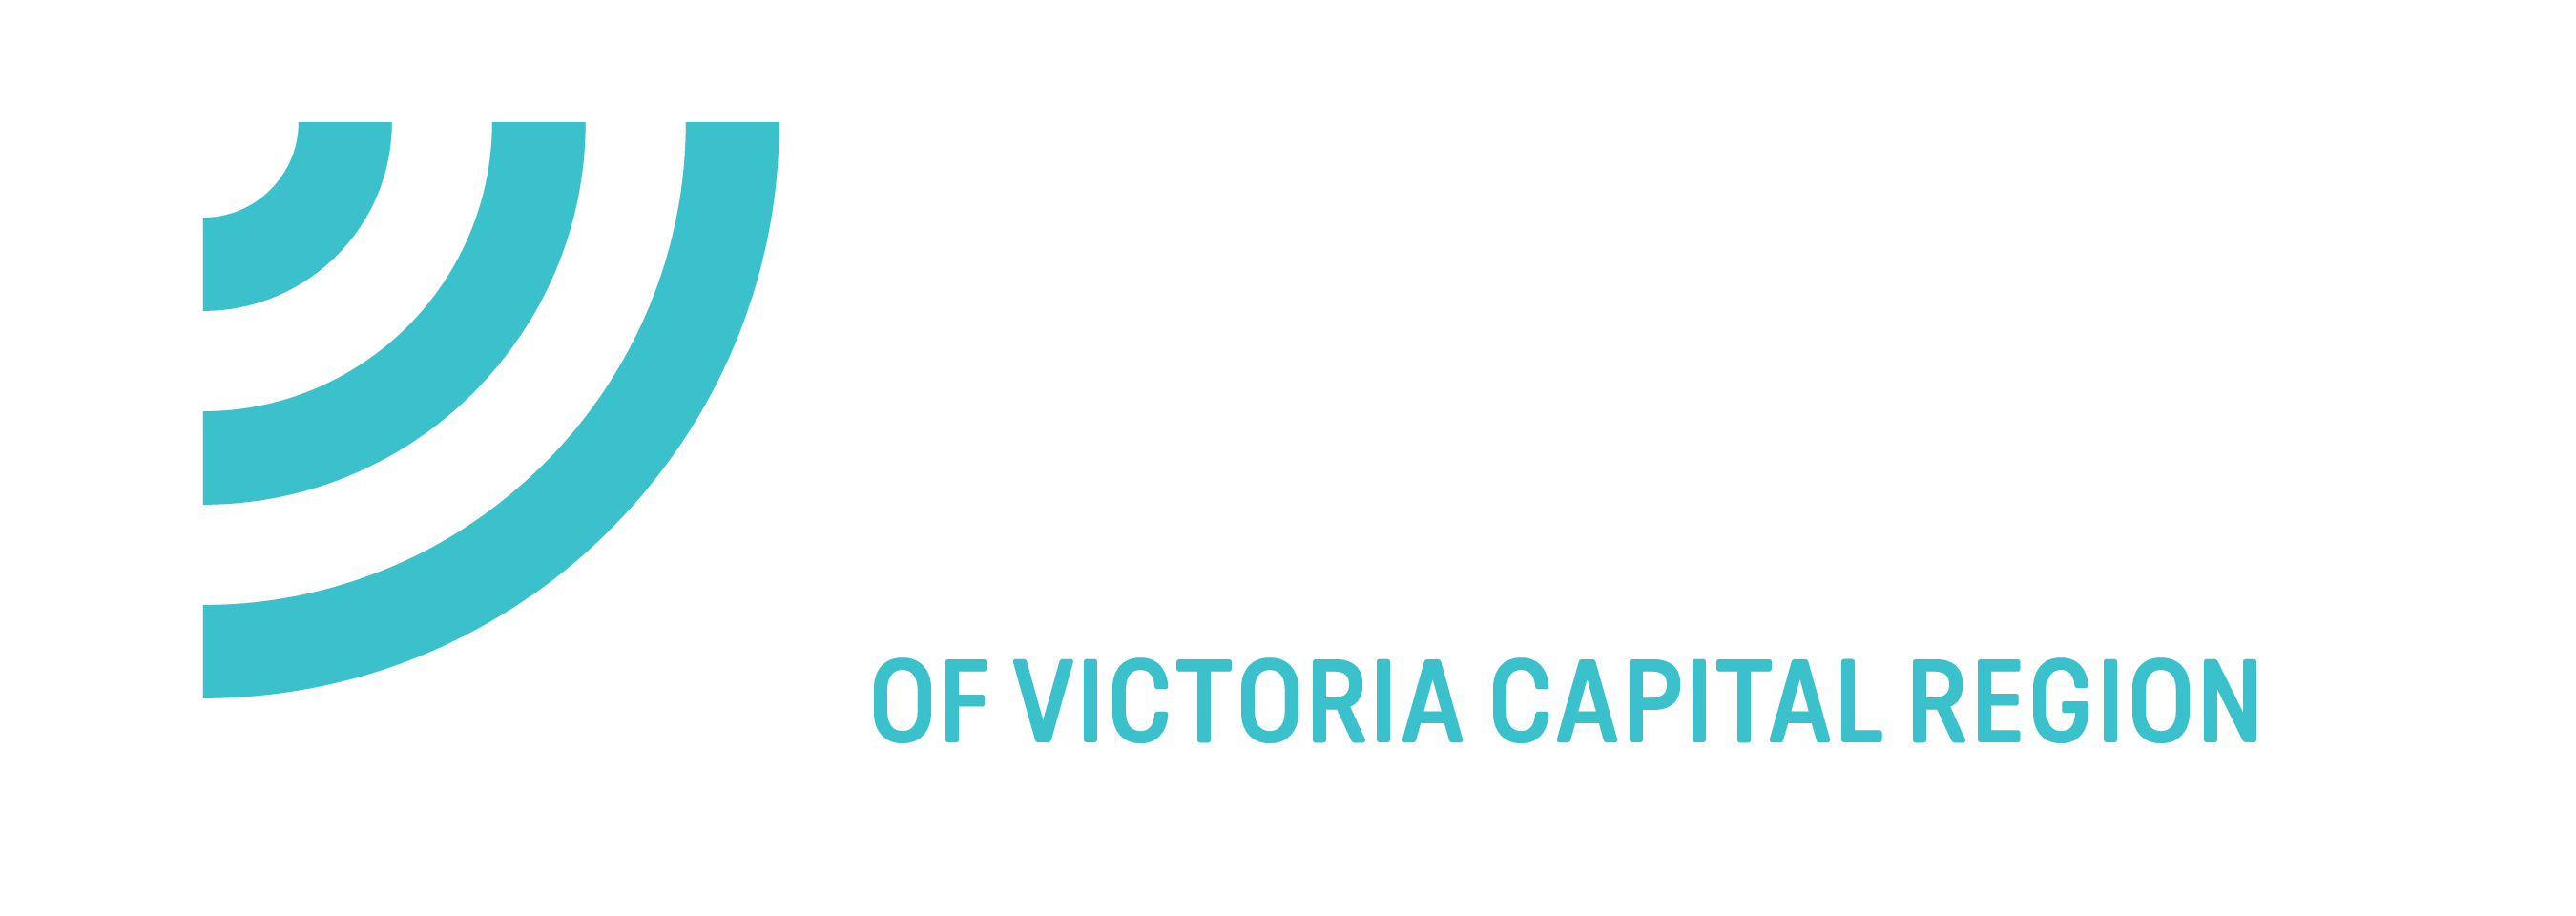 Privacy & Procedures - Big Brothers Big Sisters of Victoria Capital Region